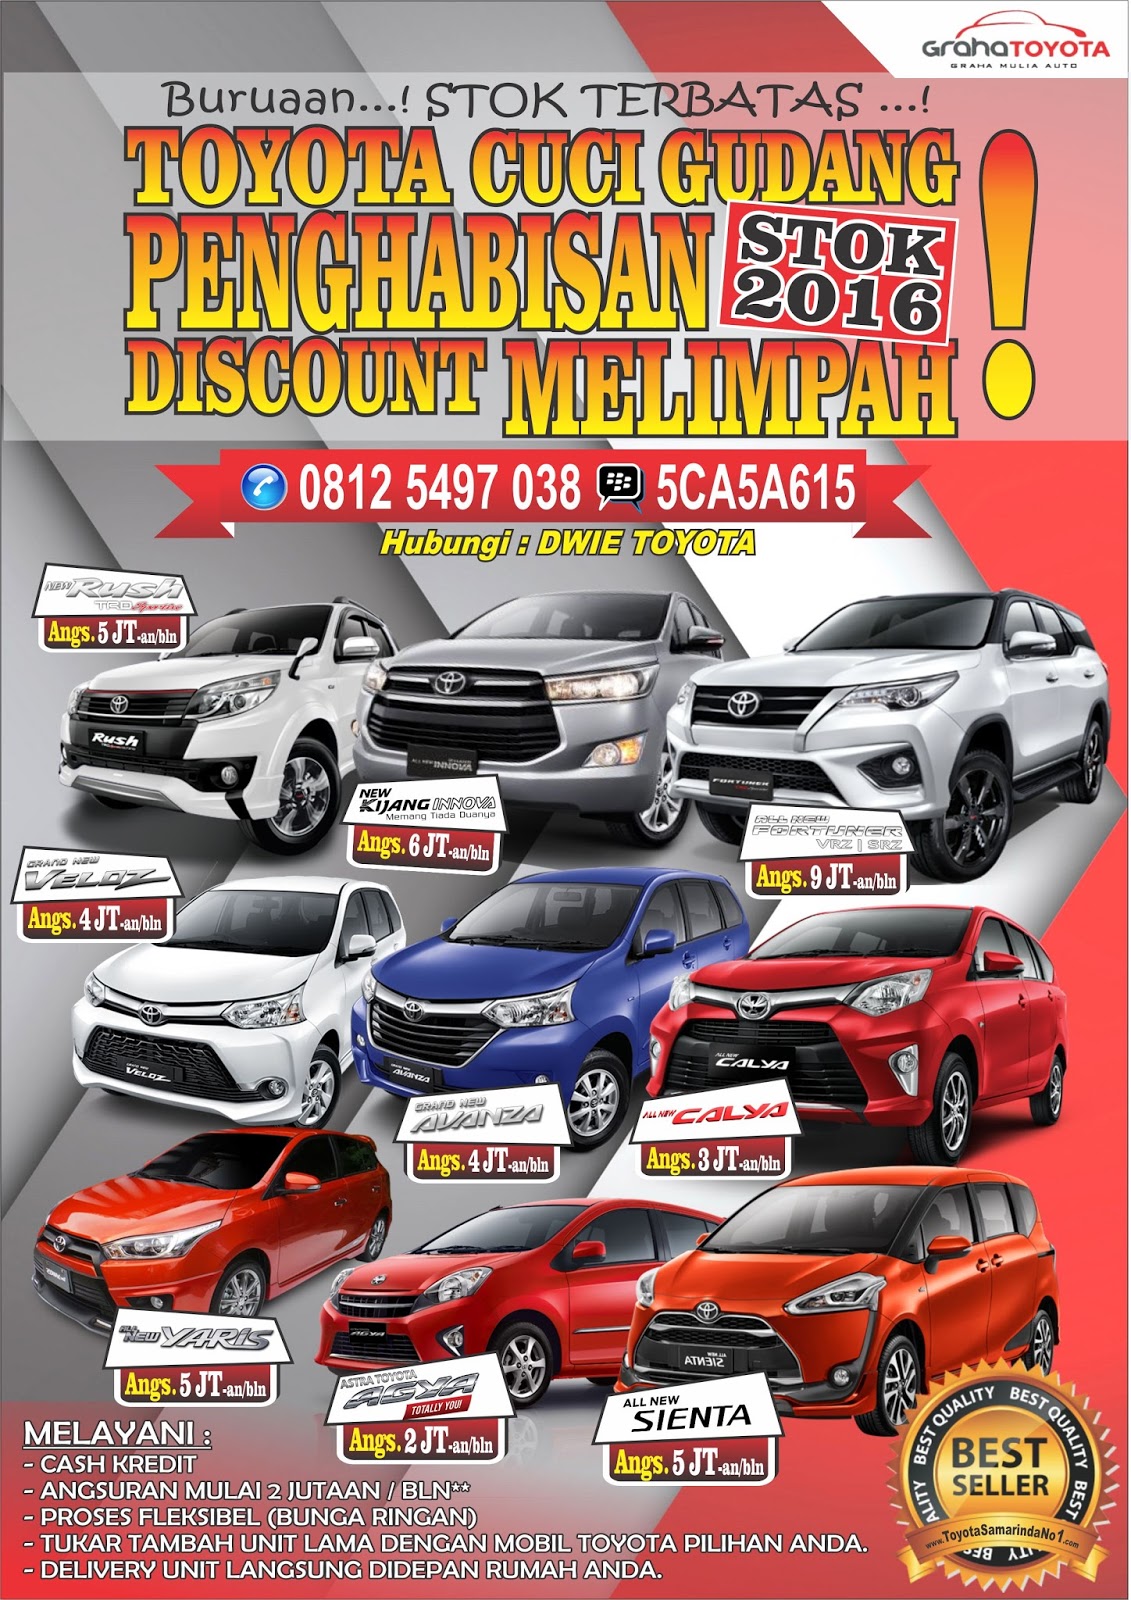 Promo Cuci Gudang Penghabisan Stok 2016 Di Toyota Samarinda No 1